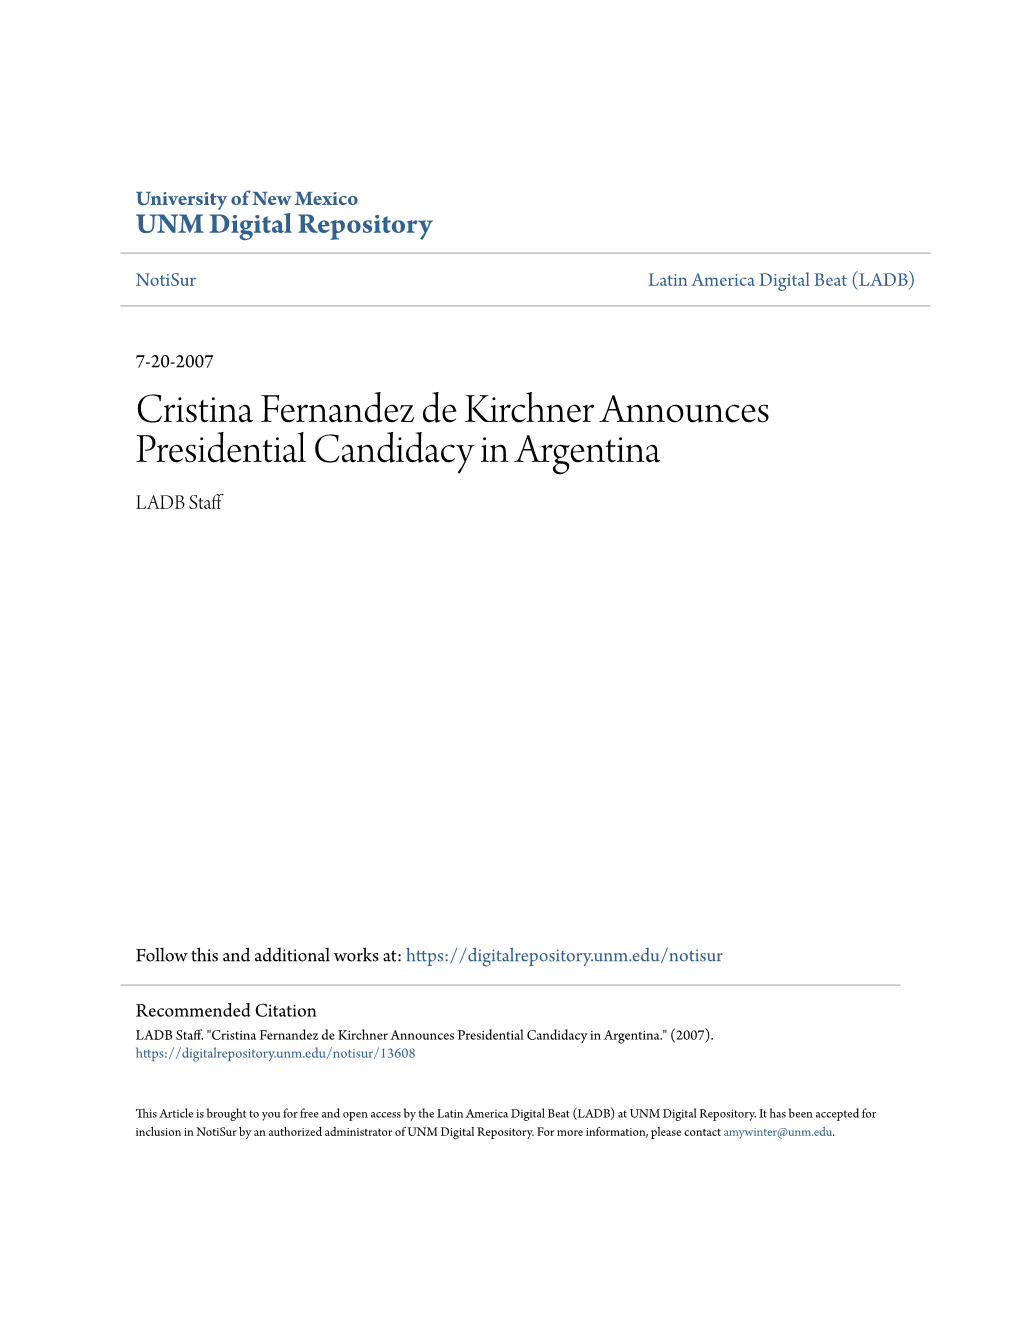 Cristina Fernandez De Kirchner Announces Presidential Candidacy in Argentina LADB Staff